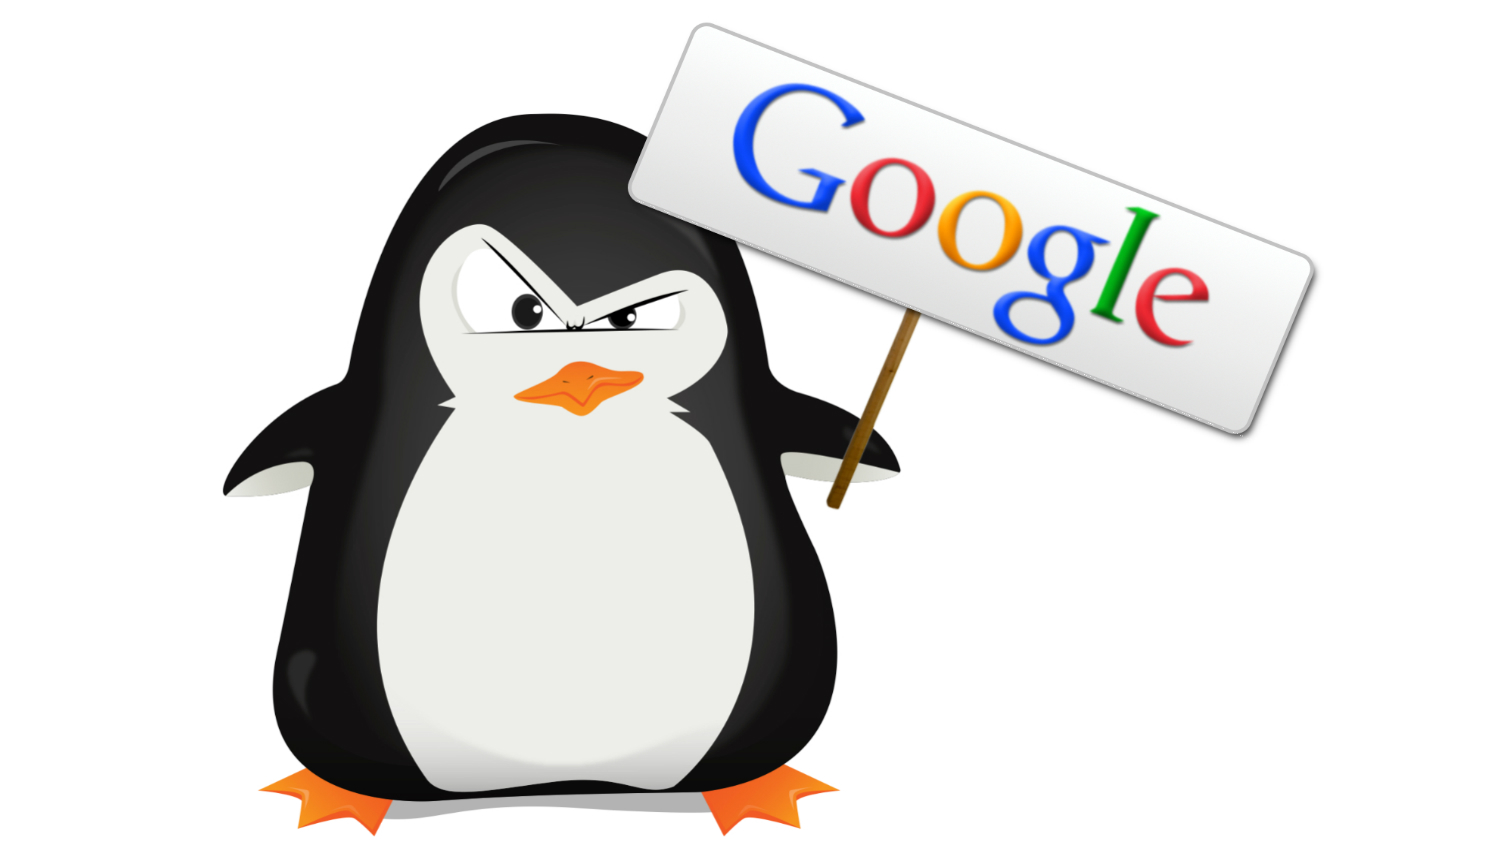 Penguin Updates - A Complete Insight on Google’s Fresh Penguin Updates